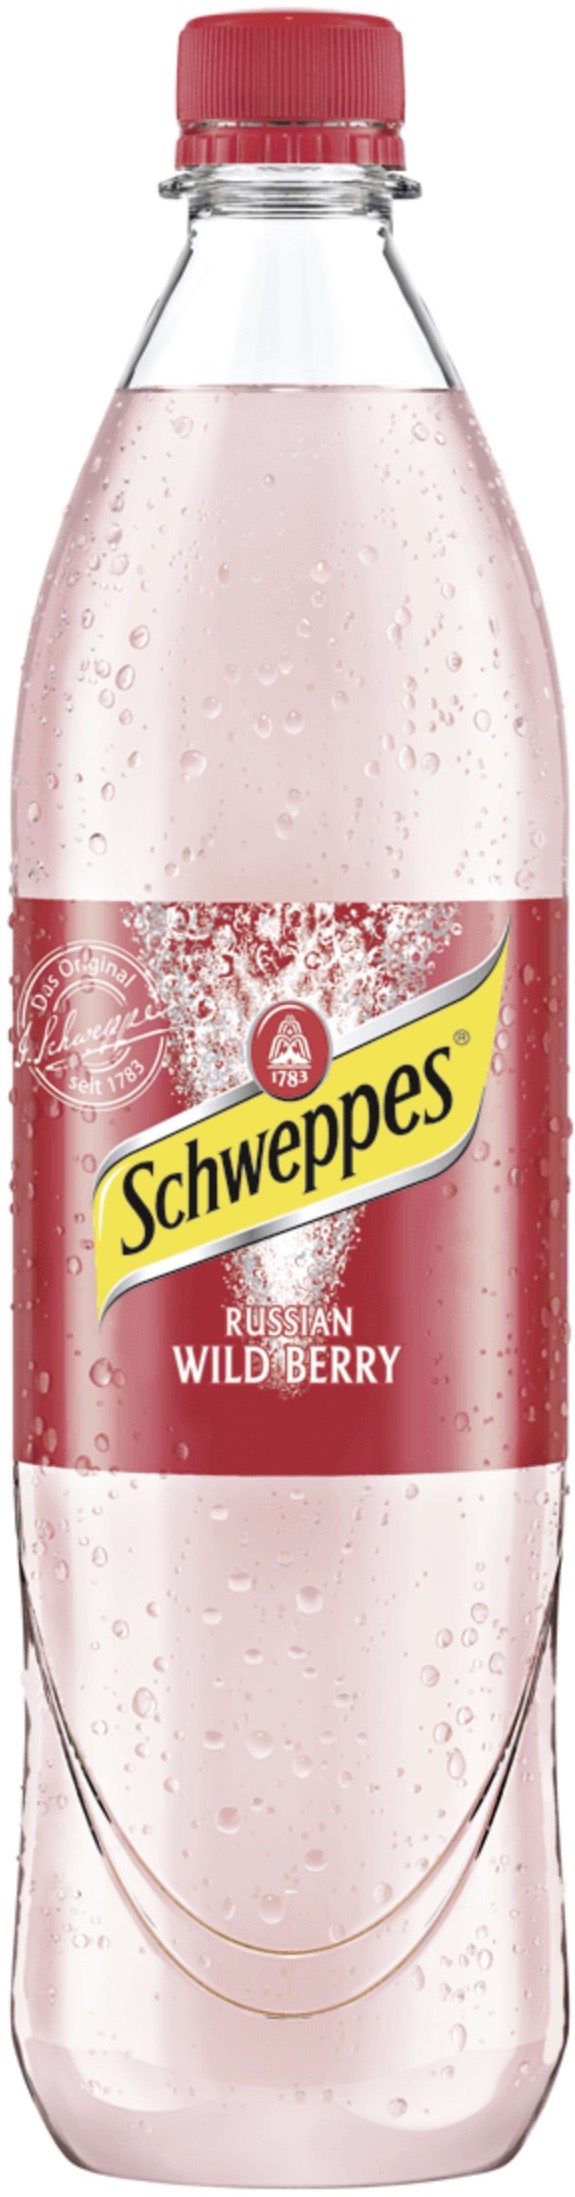 Schweppes Russian Wild Berry 1,0L MEHRWEG